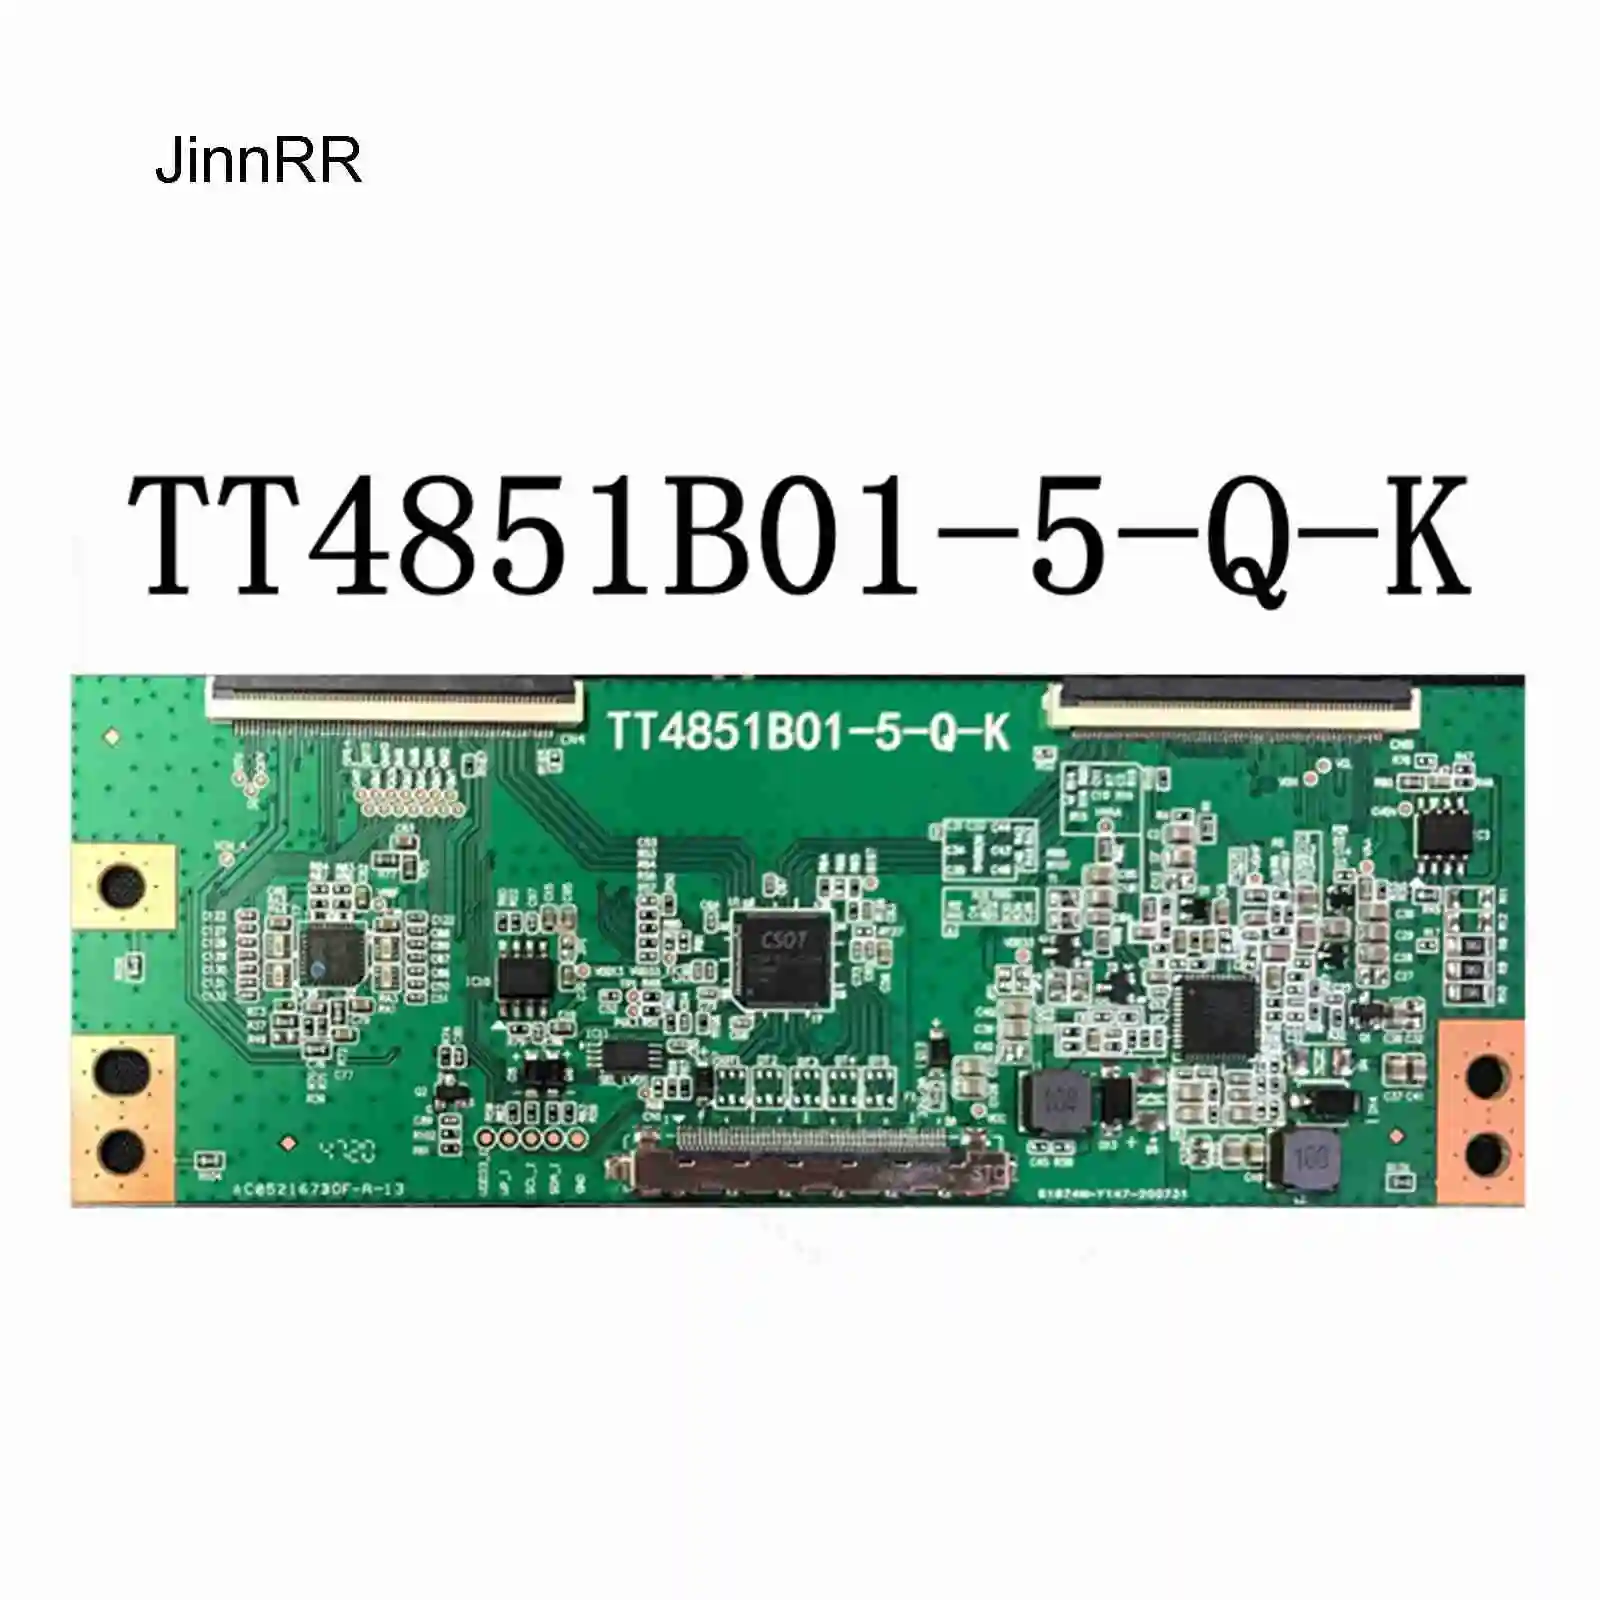 

TT4851B01-5-Q-K new original constant current plate for LED49N2600 L49M5-AZ Logic board Strict test quality assurance